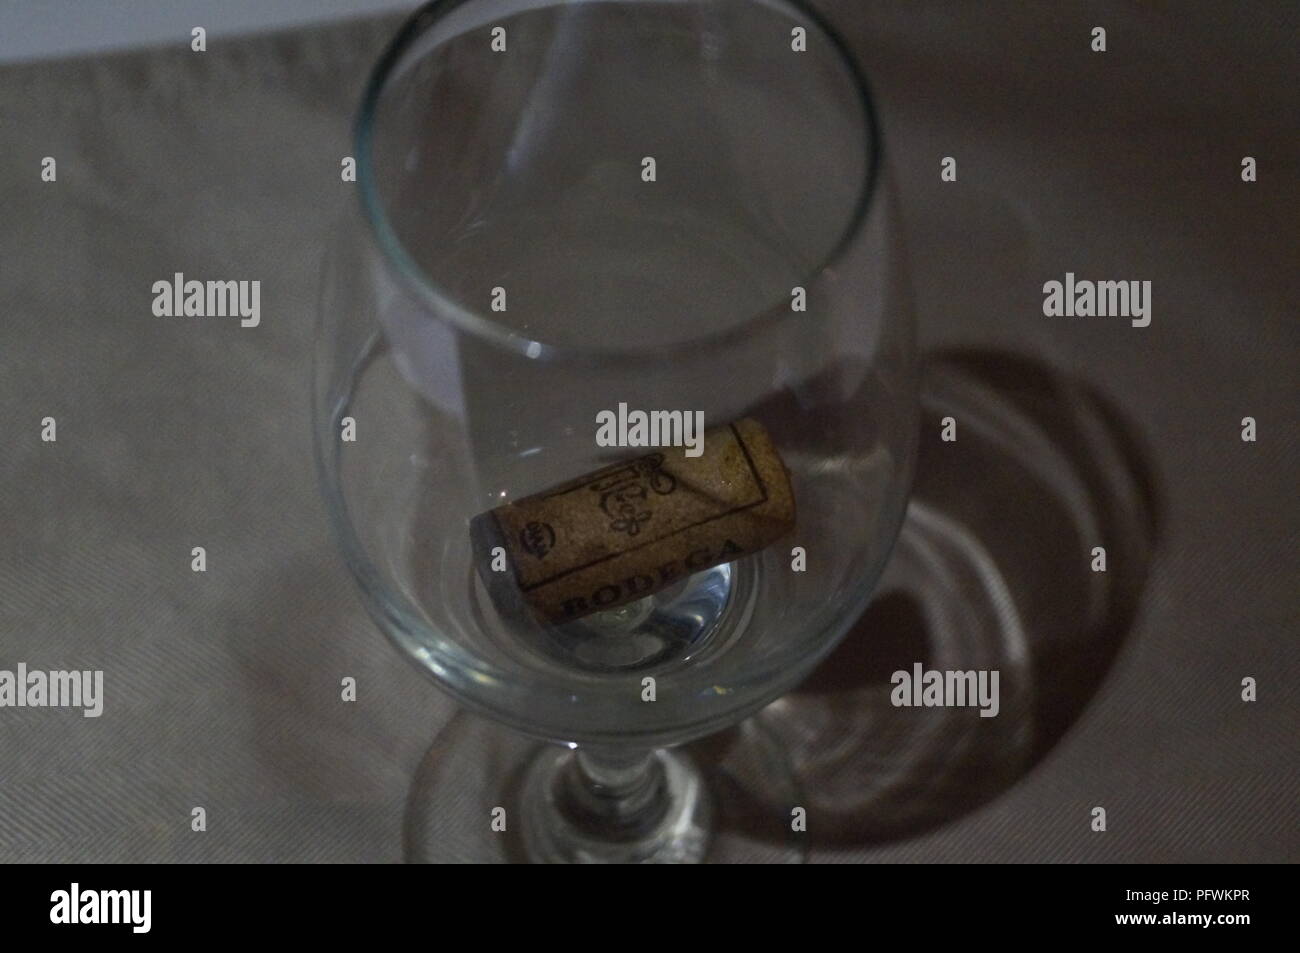 Empty Wine glass with corck Stock Photo